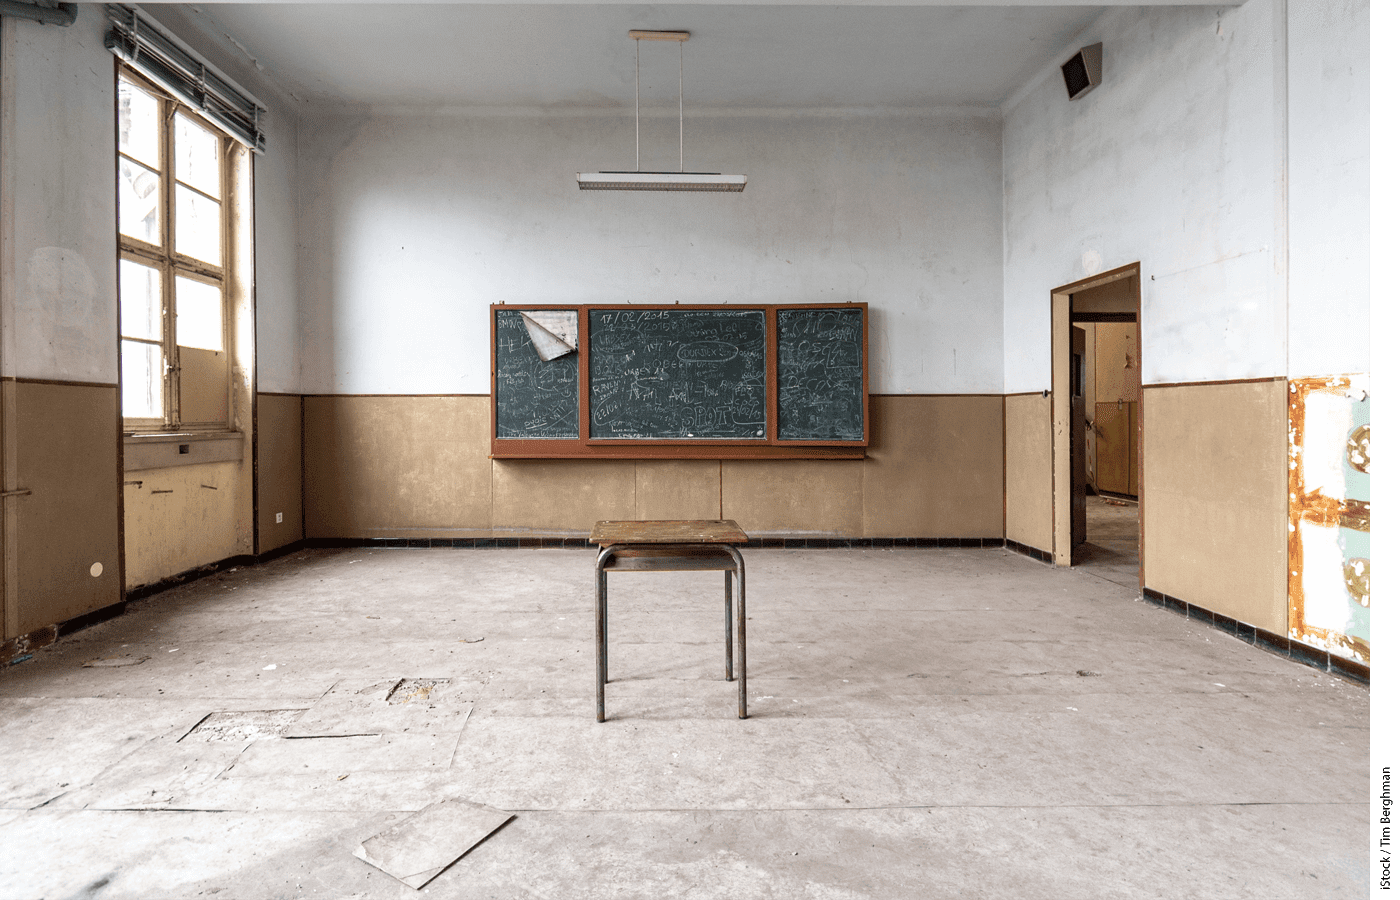 One desk in an empty classroom